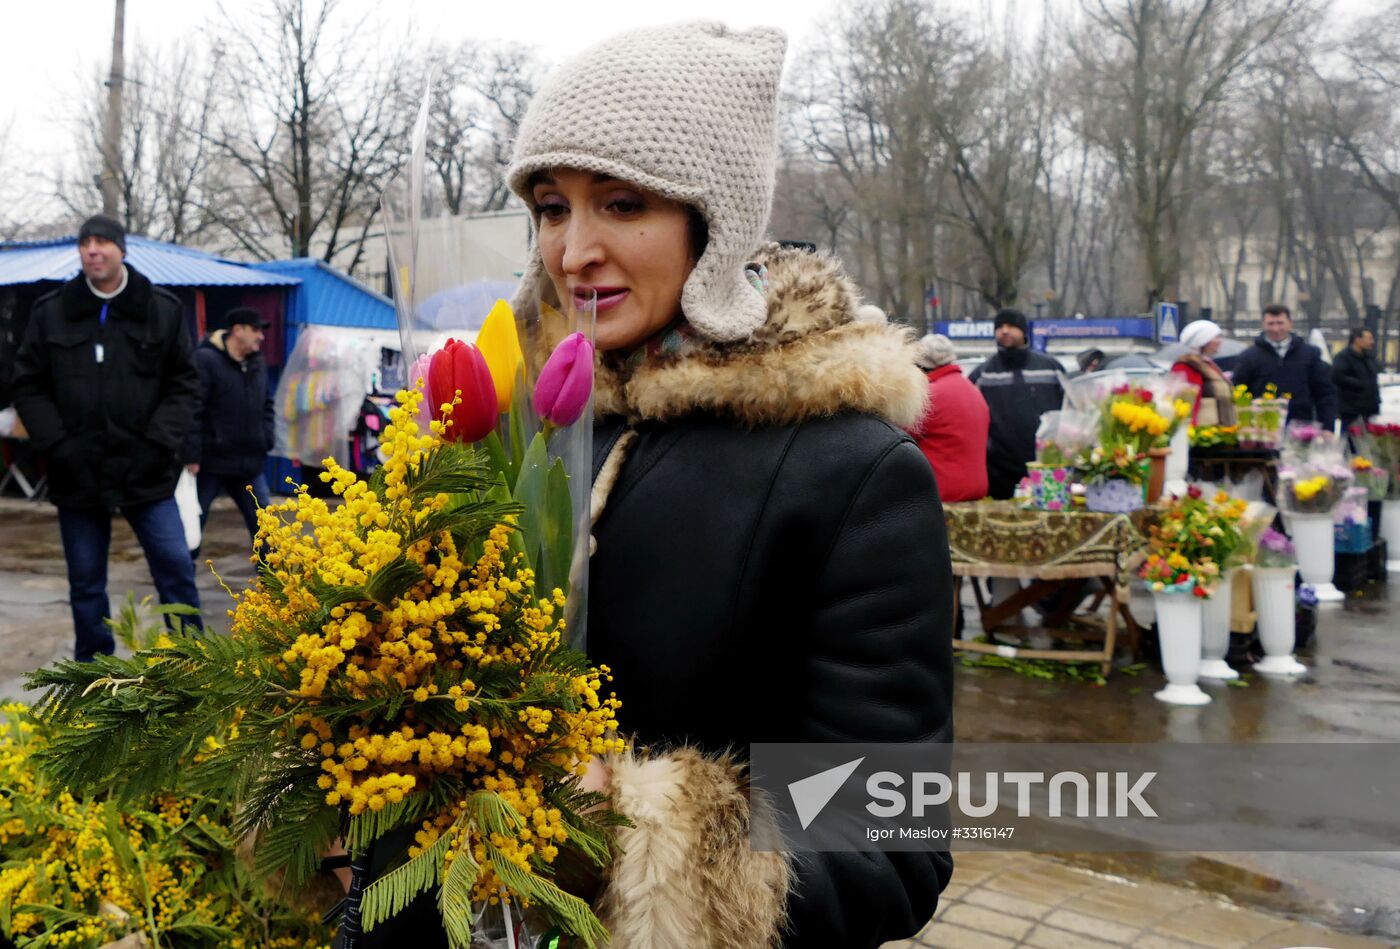 International Women's Day celebrations in Donetsk